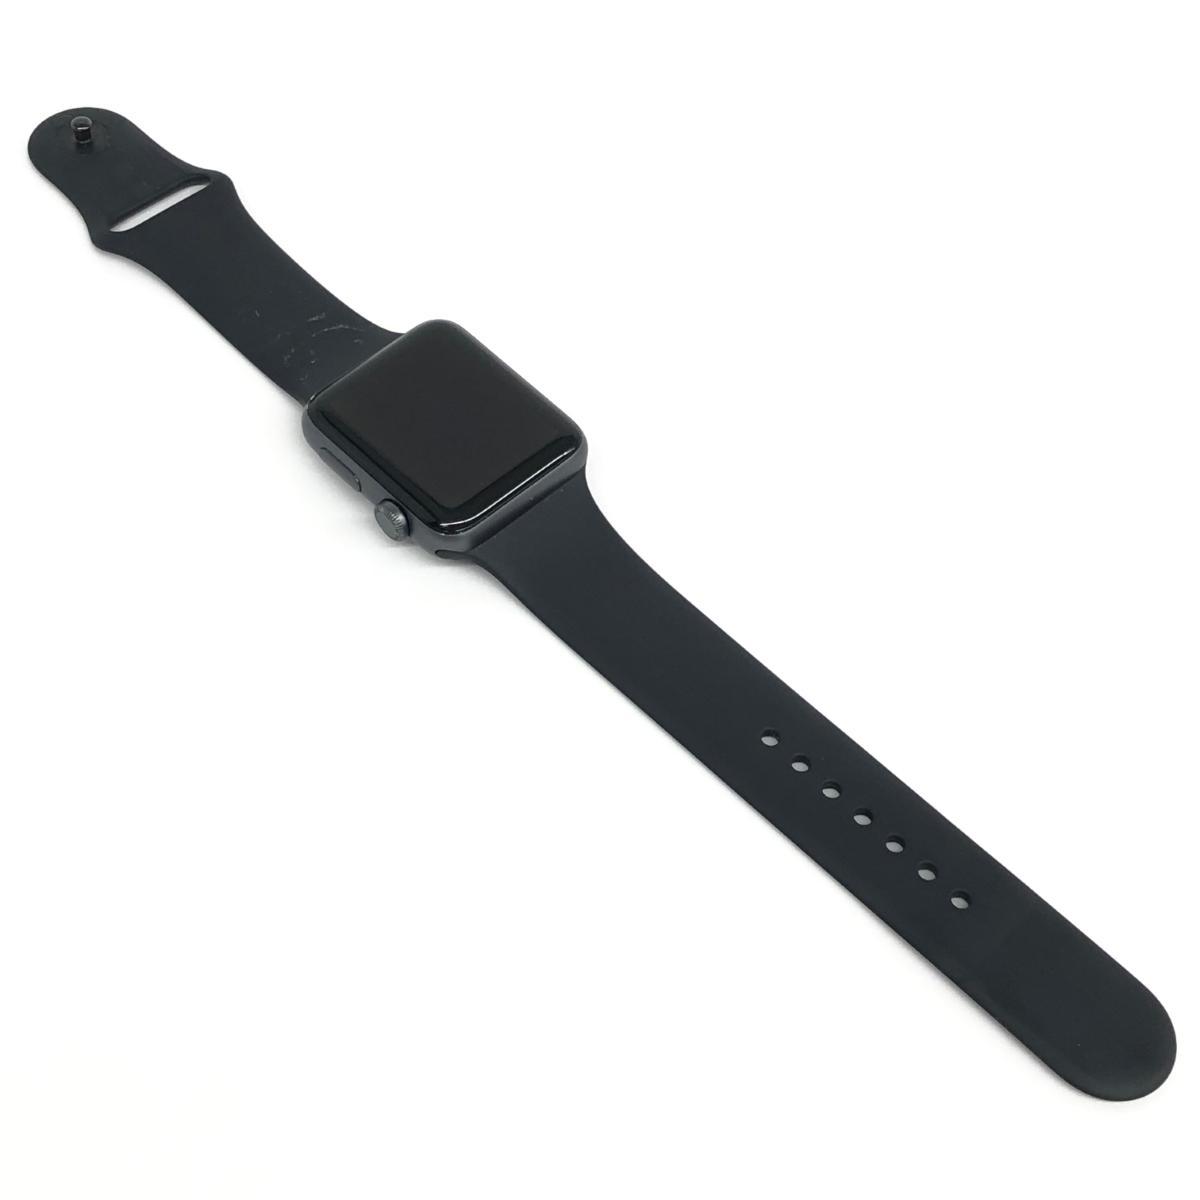 ◆Apple アップル アップルウォッチ シリーズ3 Apple Watch Series3◆ 42MM WR-50M ブラック 家電